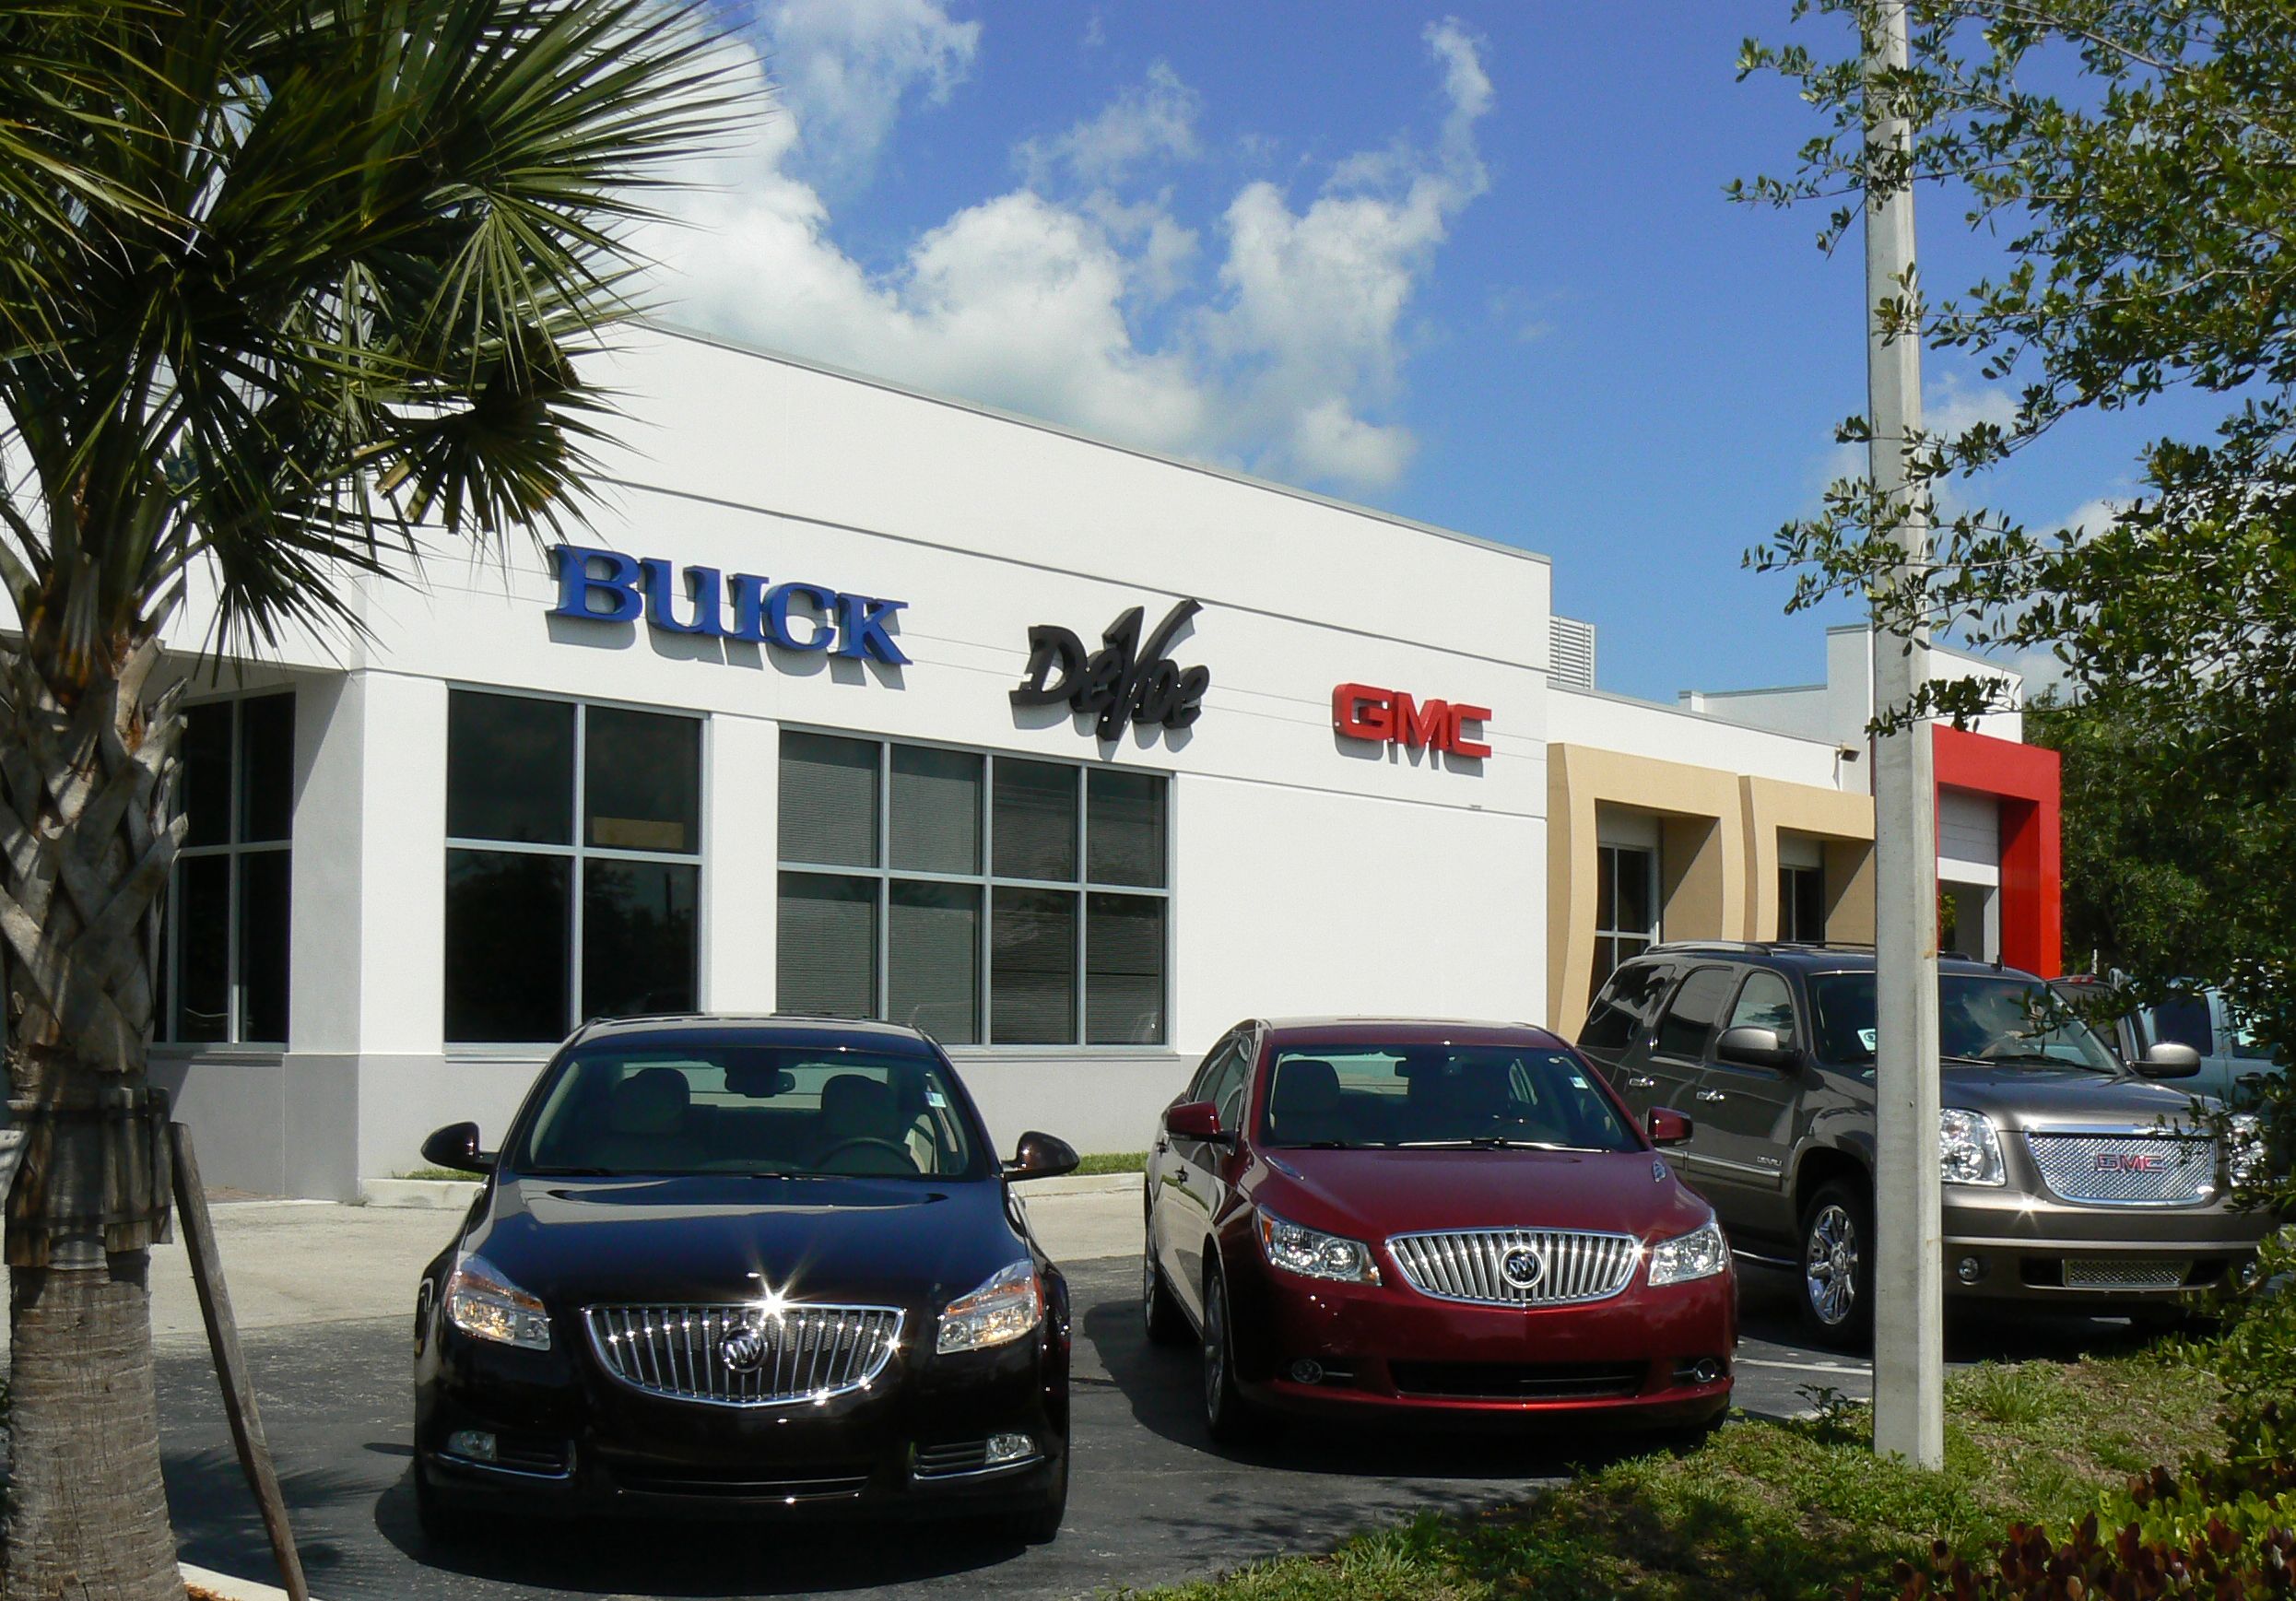 DeVoe Buick GMC dealership in Naples, Florida South Florida, Naples